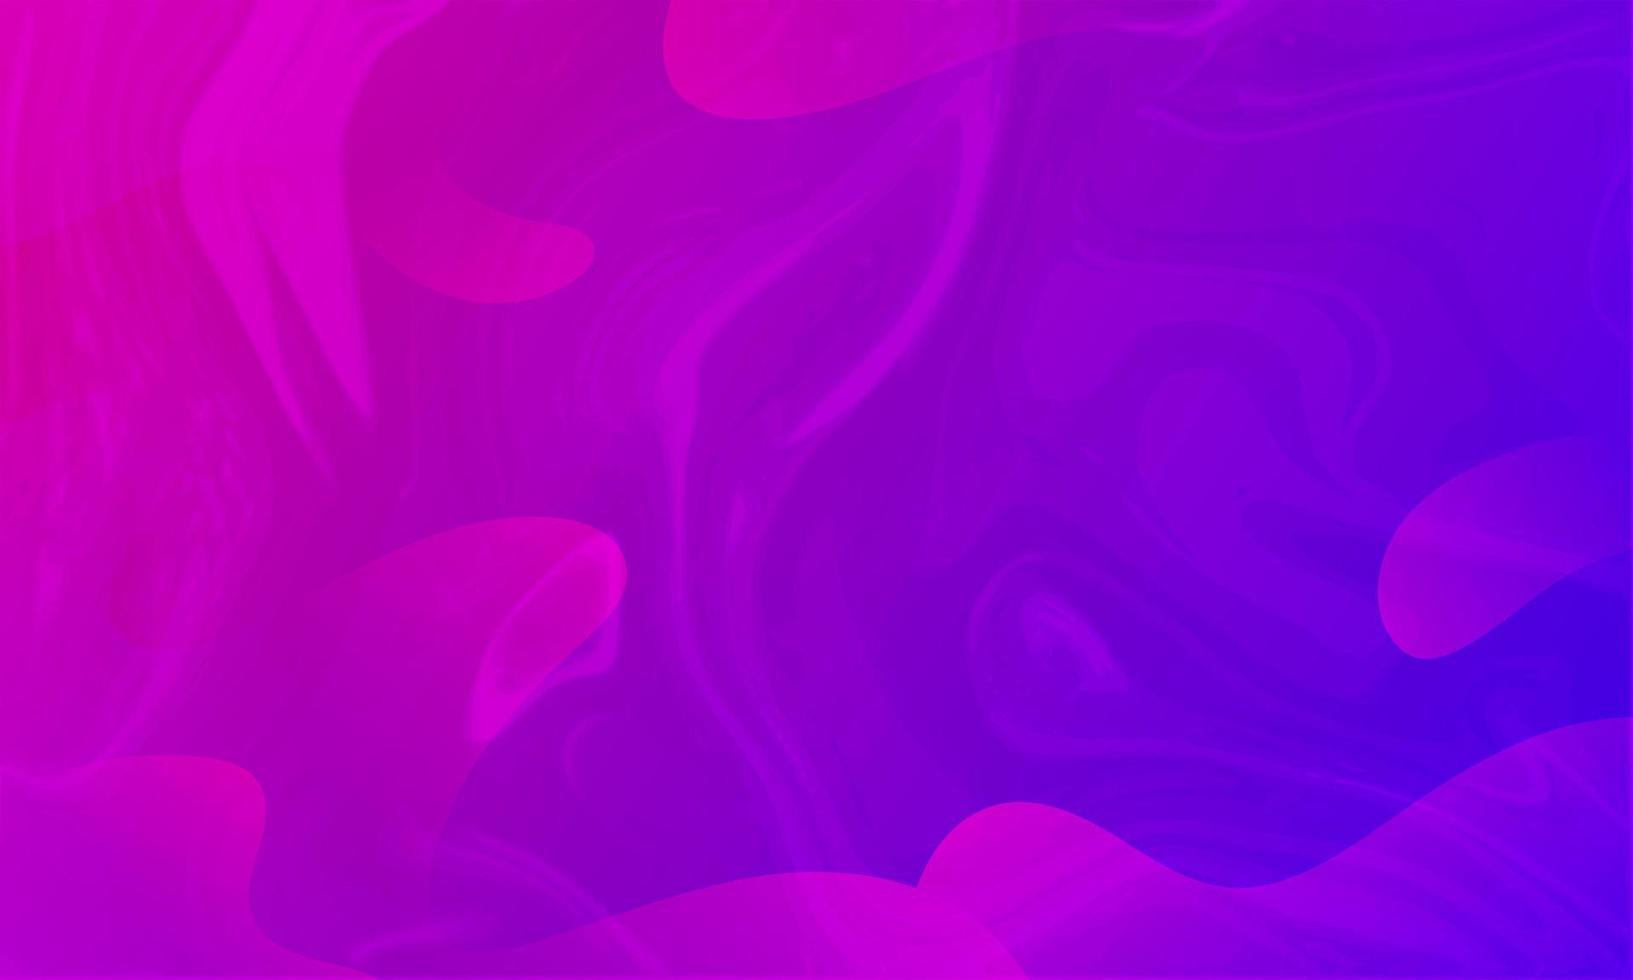 abstracte paarse vloeiende golfachtergrond vector